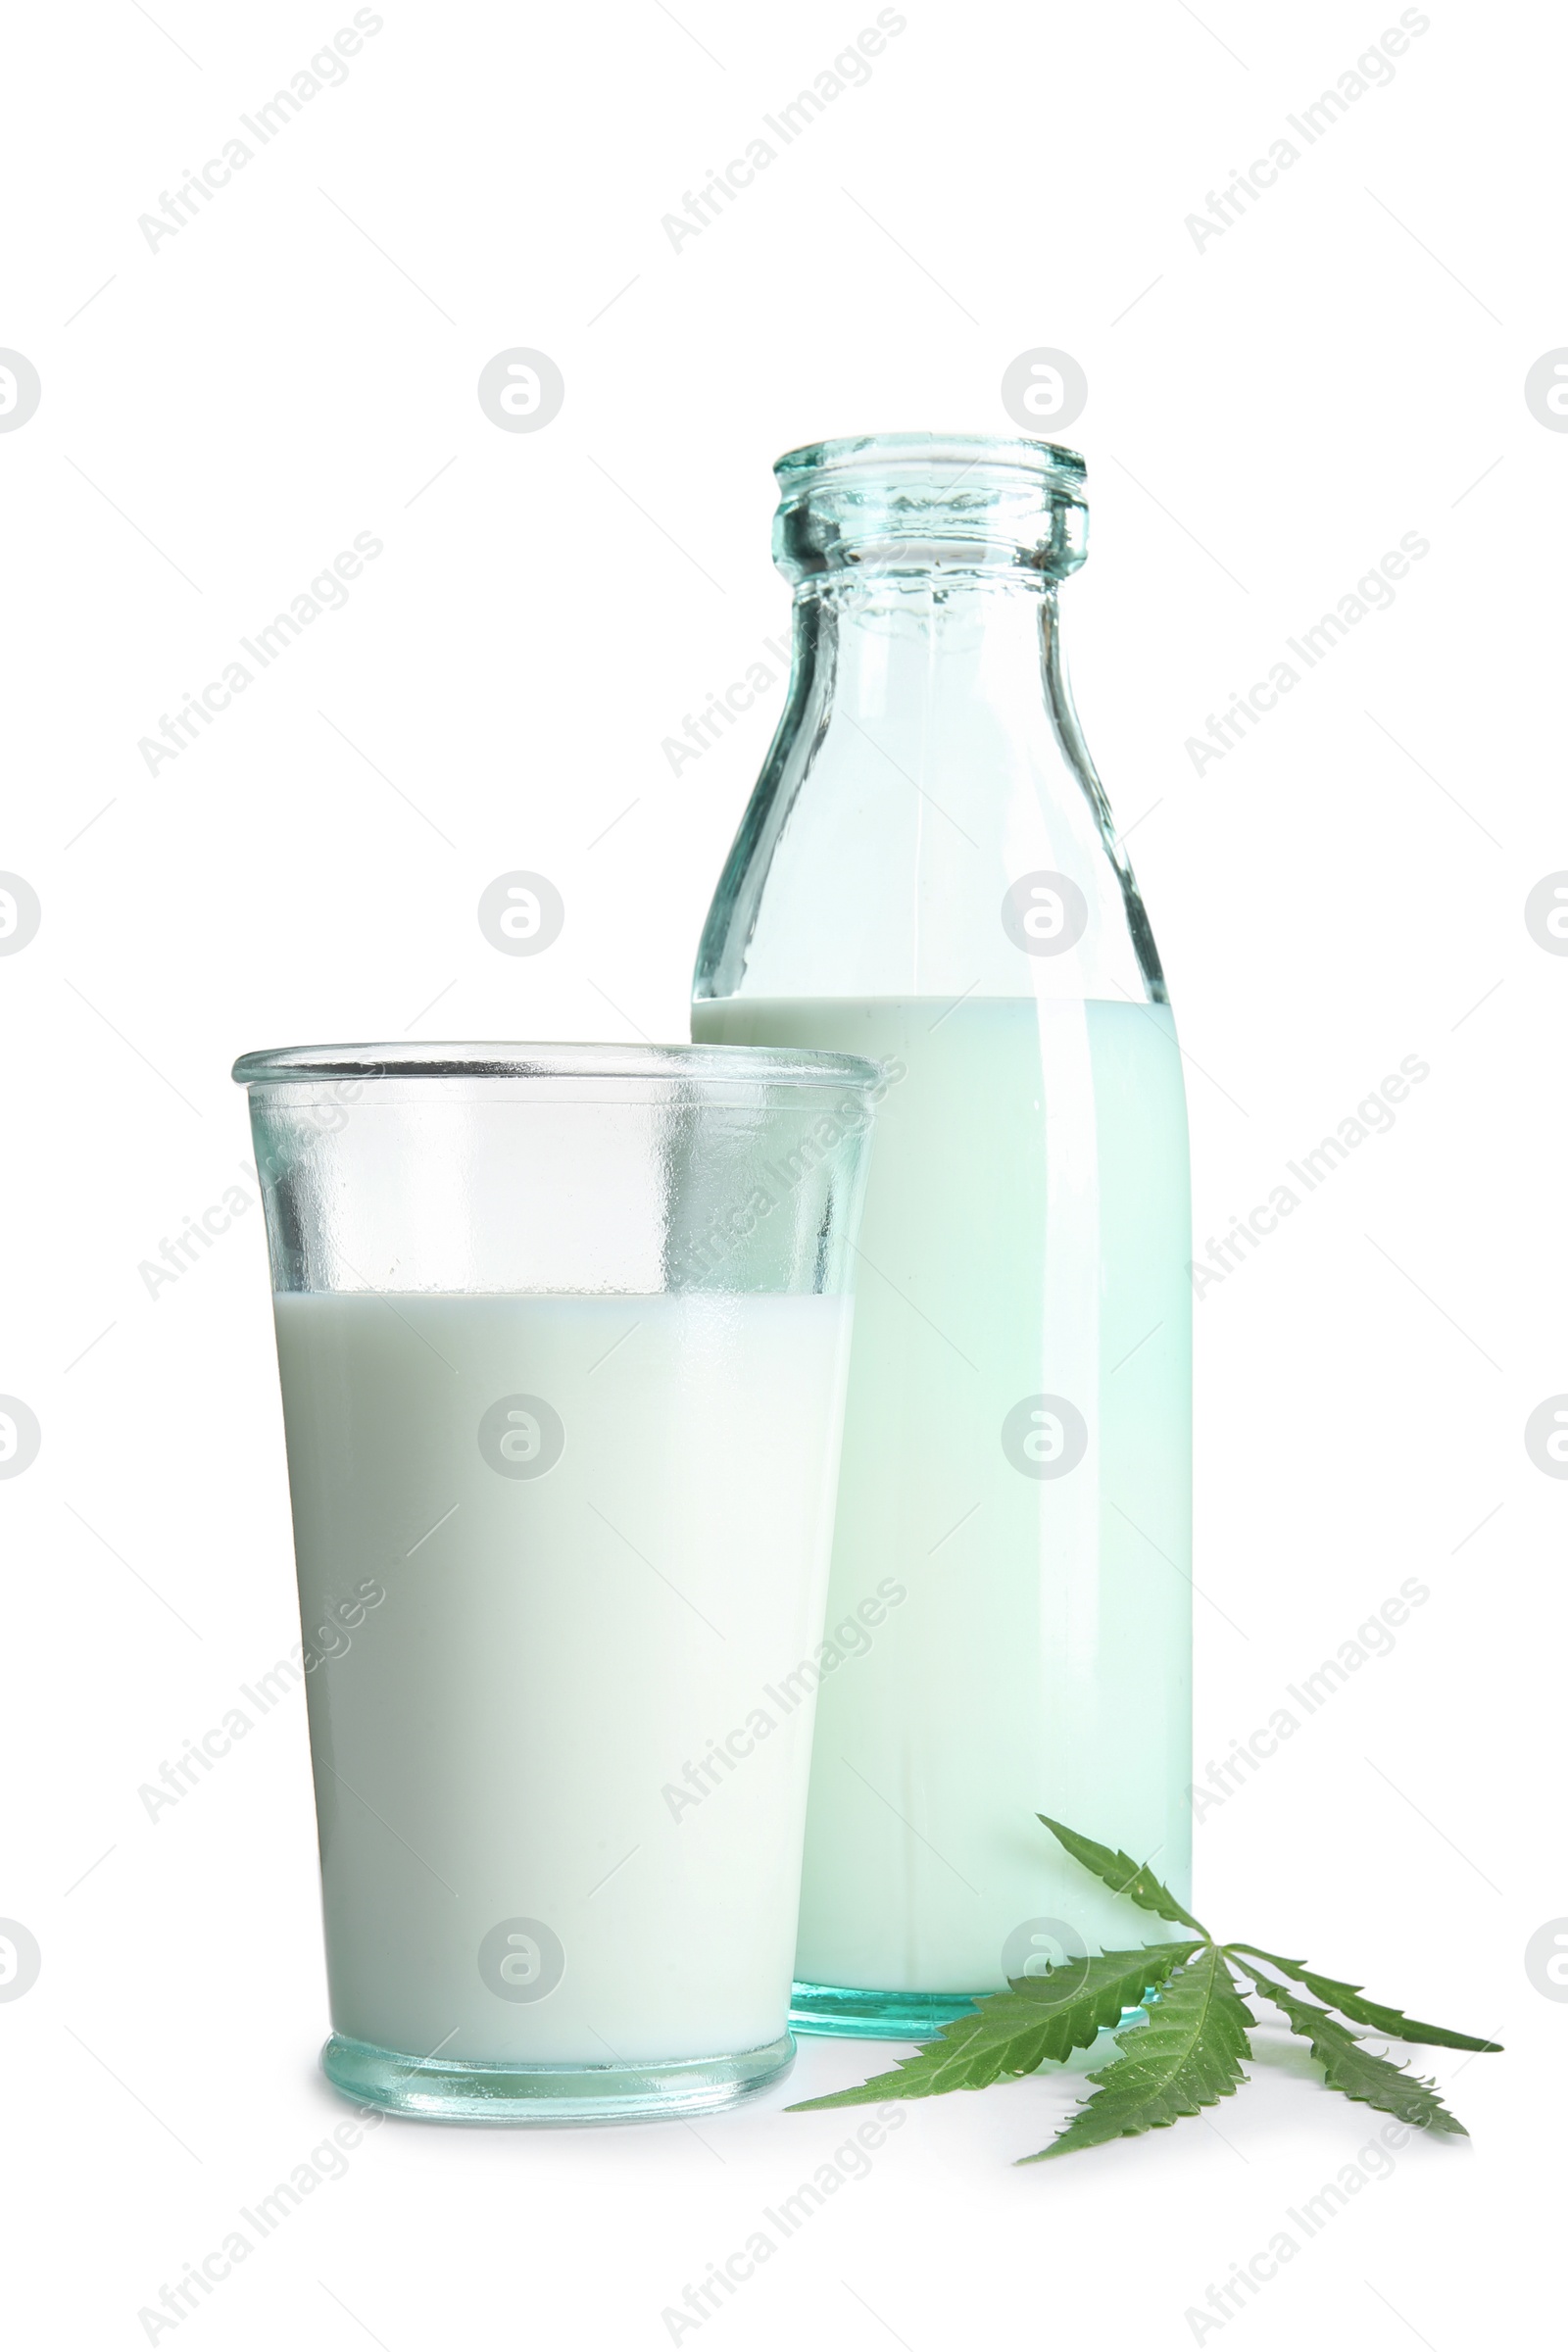 Photo of Glassware with hemp milk on white background